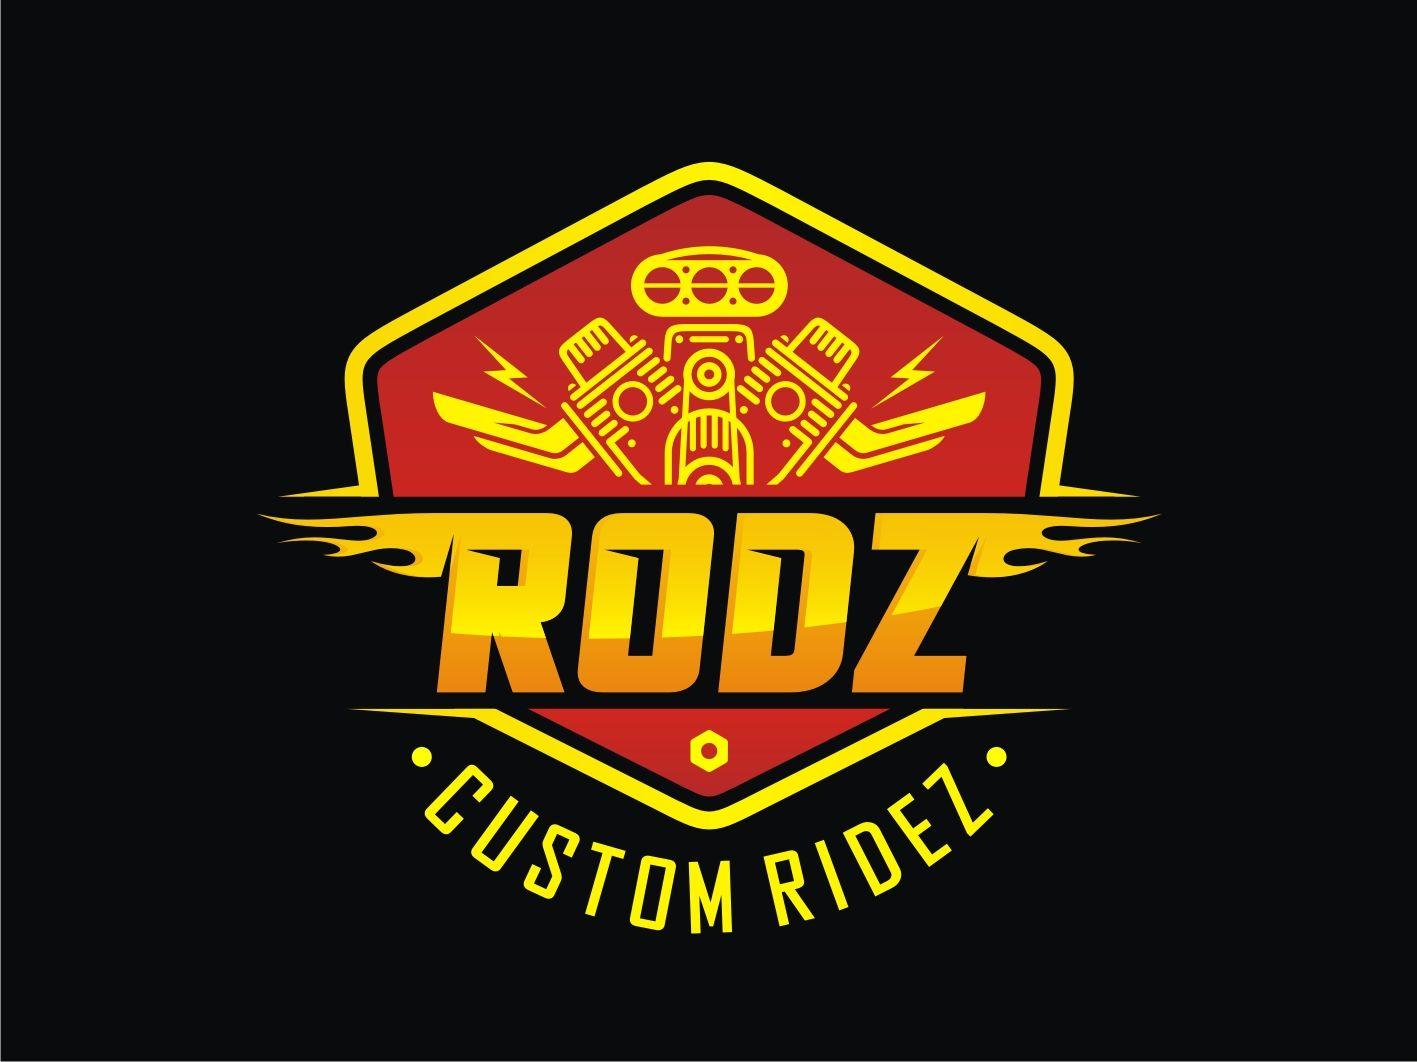 Cool Car Company Logo - Bold, Playful, Business Logo Design for Rodz Custom Ridez by ...